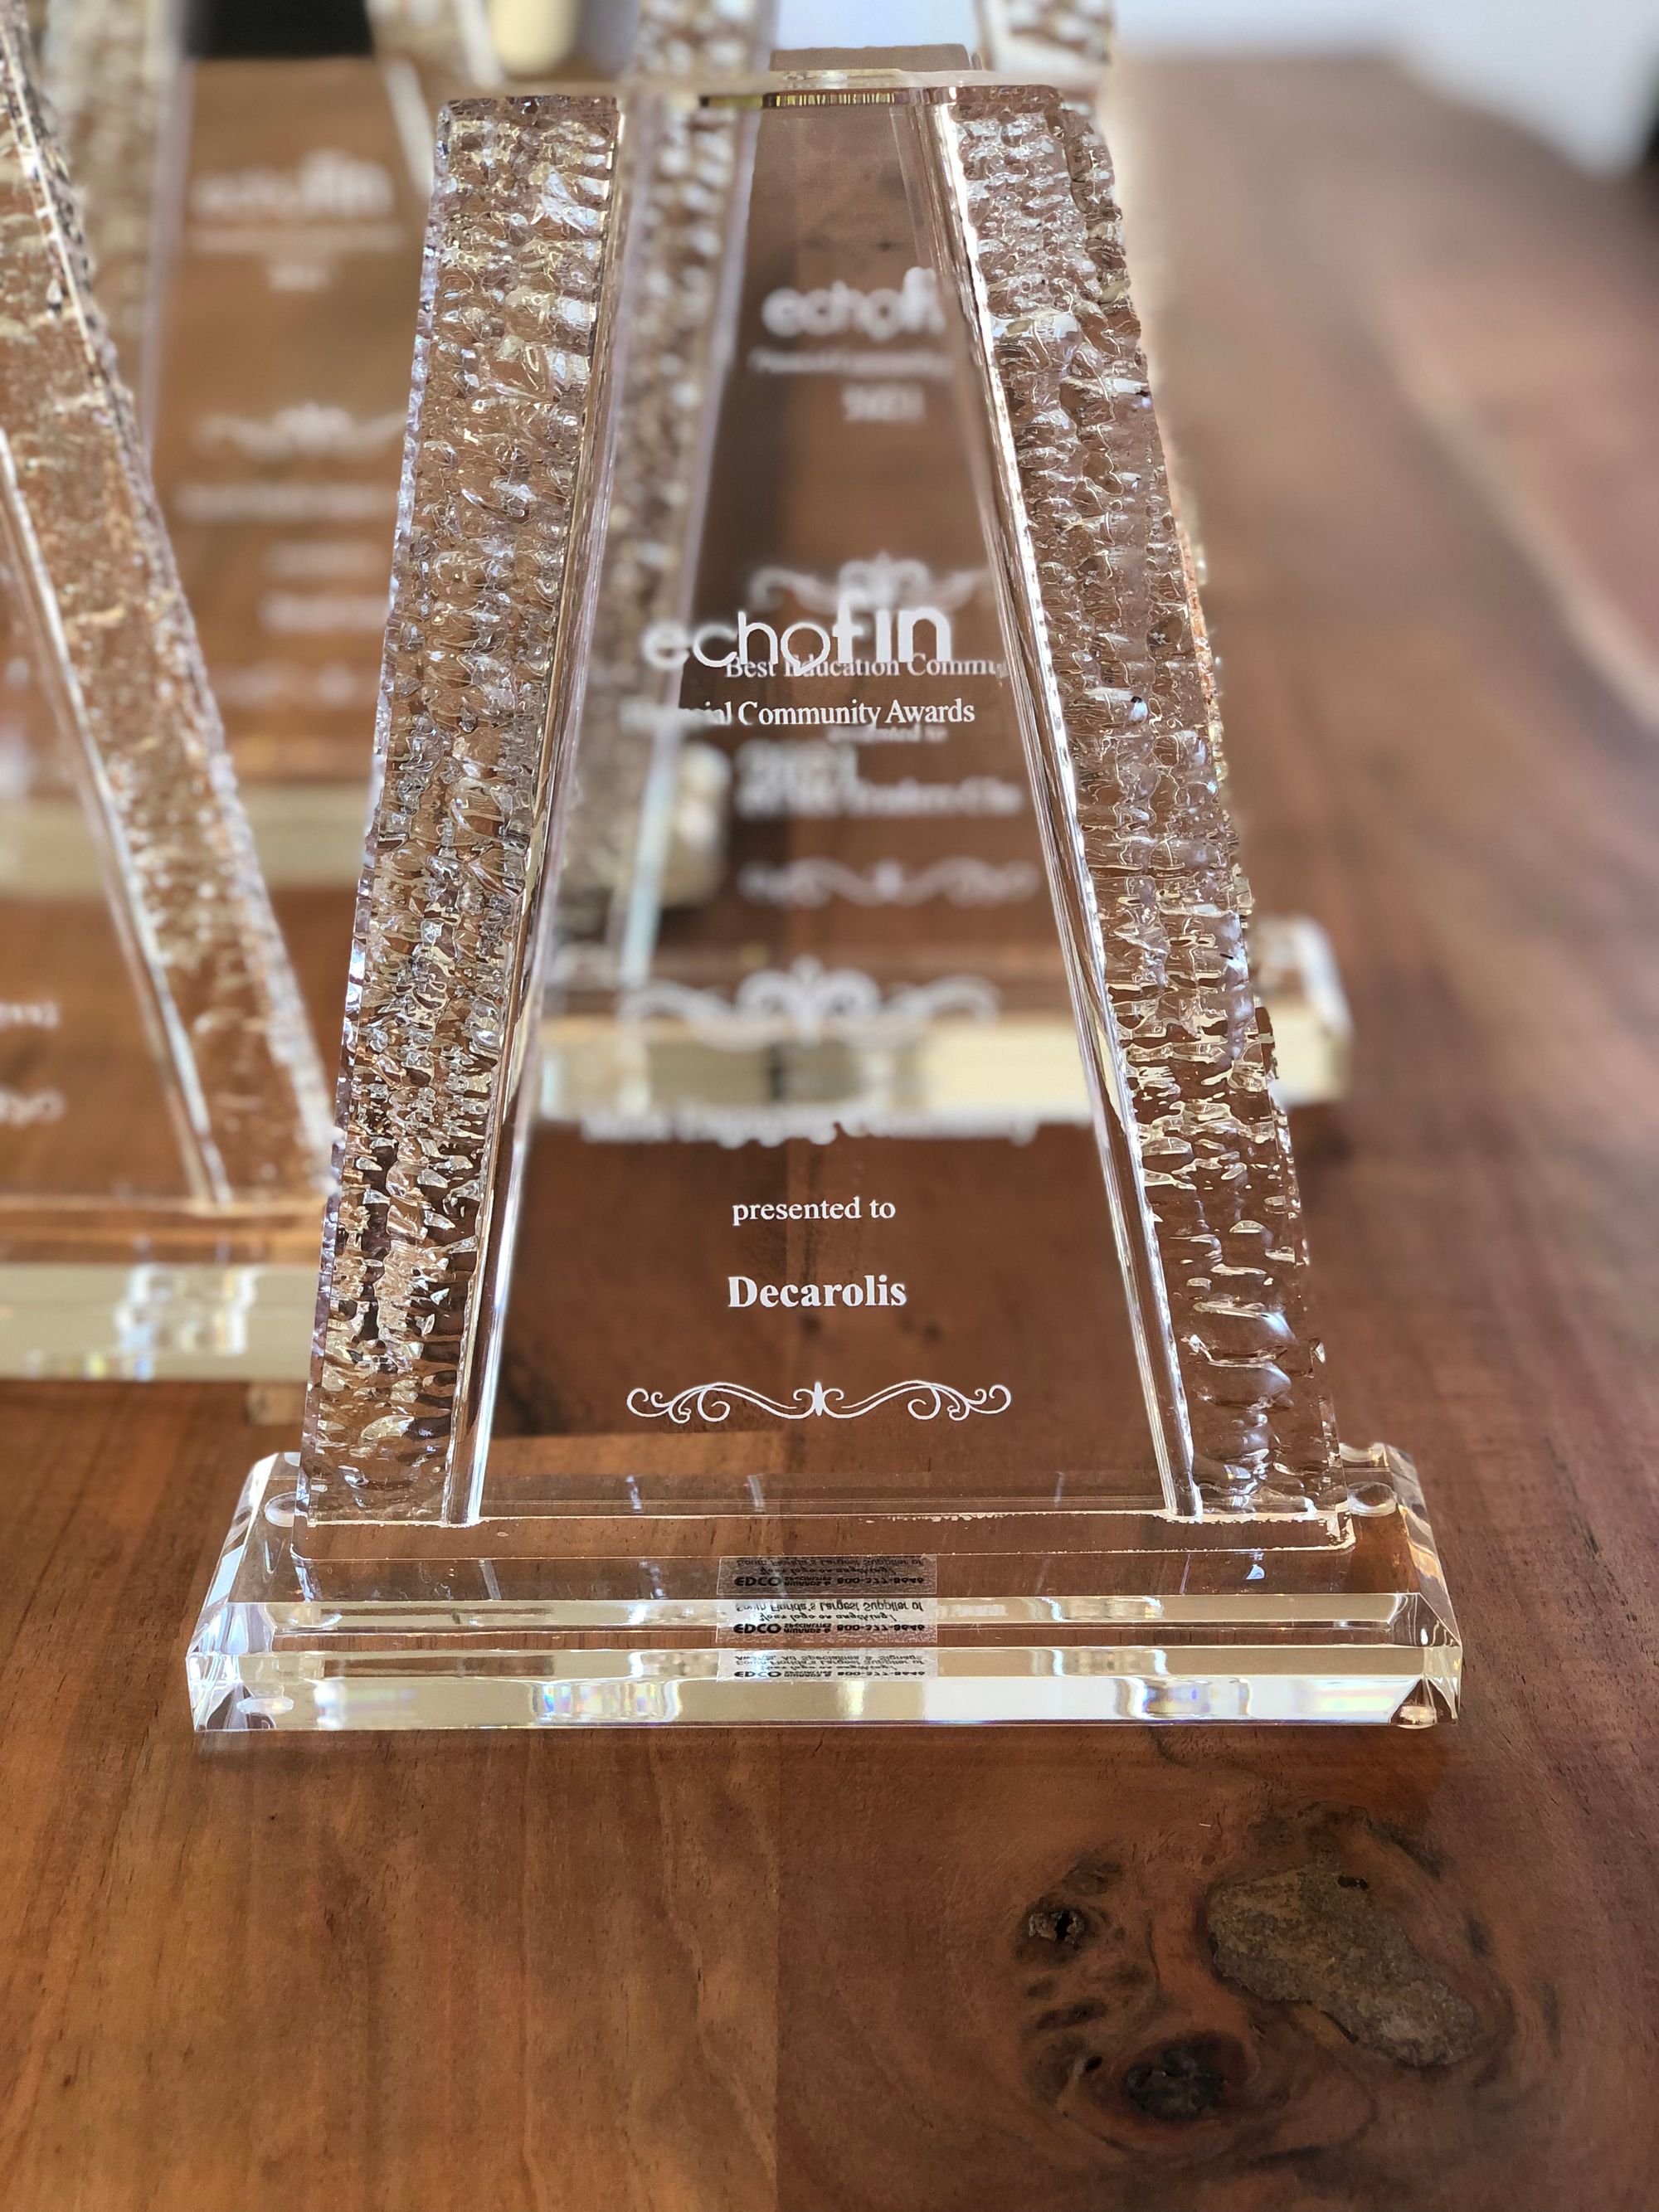 Echofin Financial Community Awards 2021 Winners